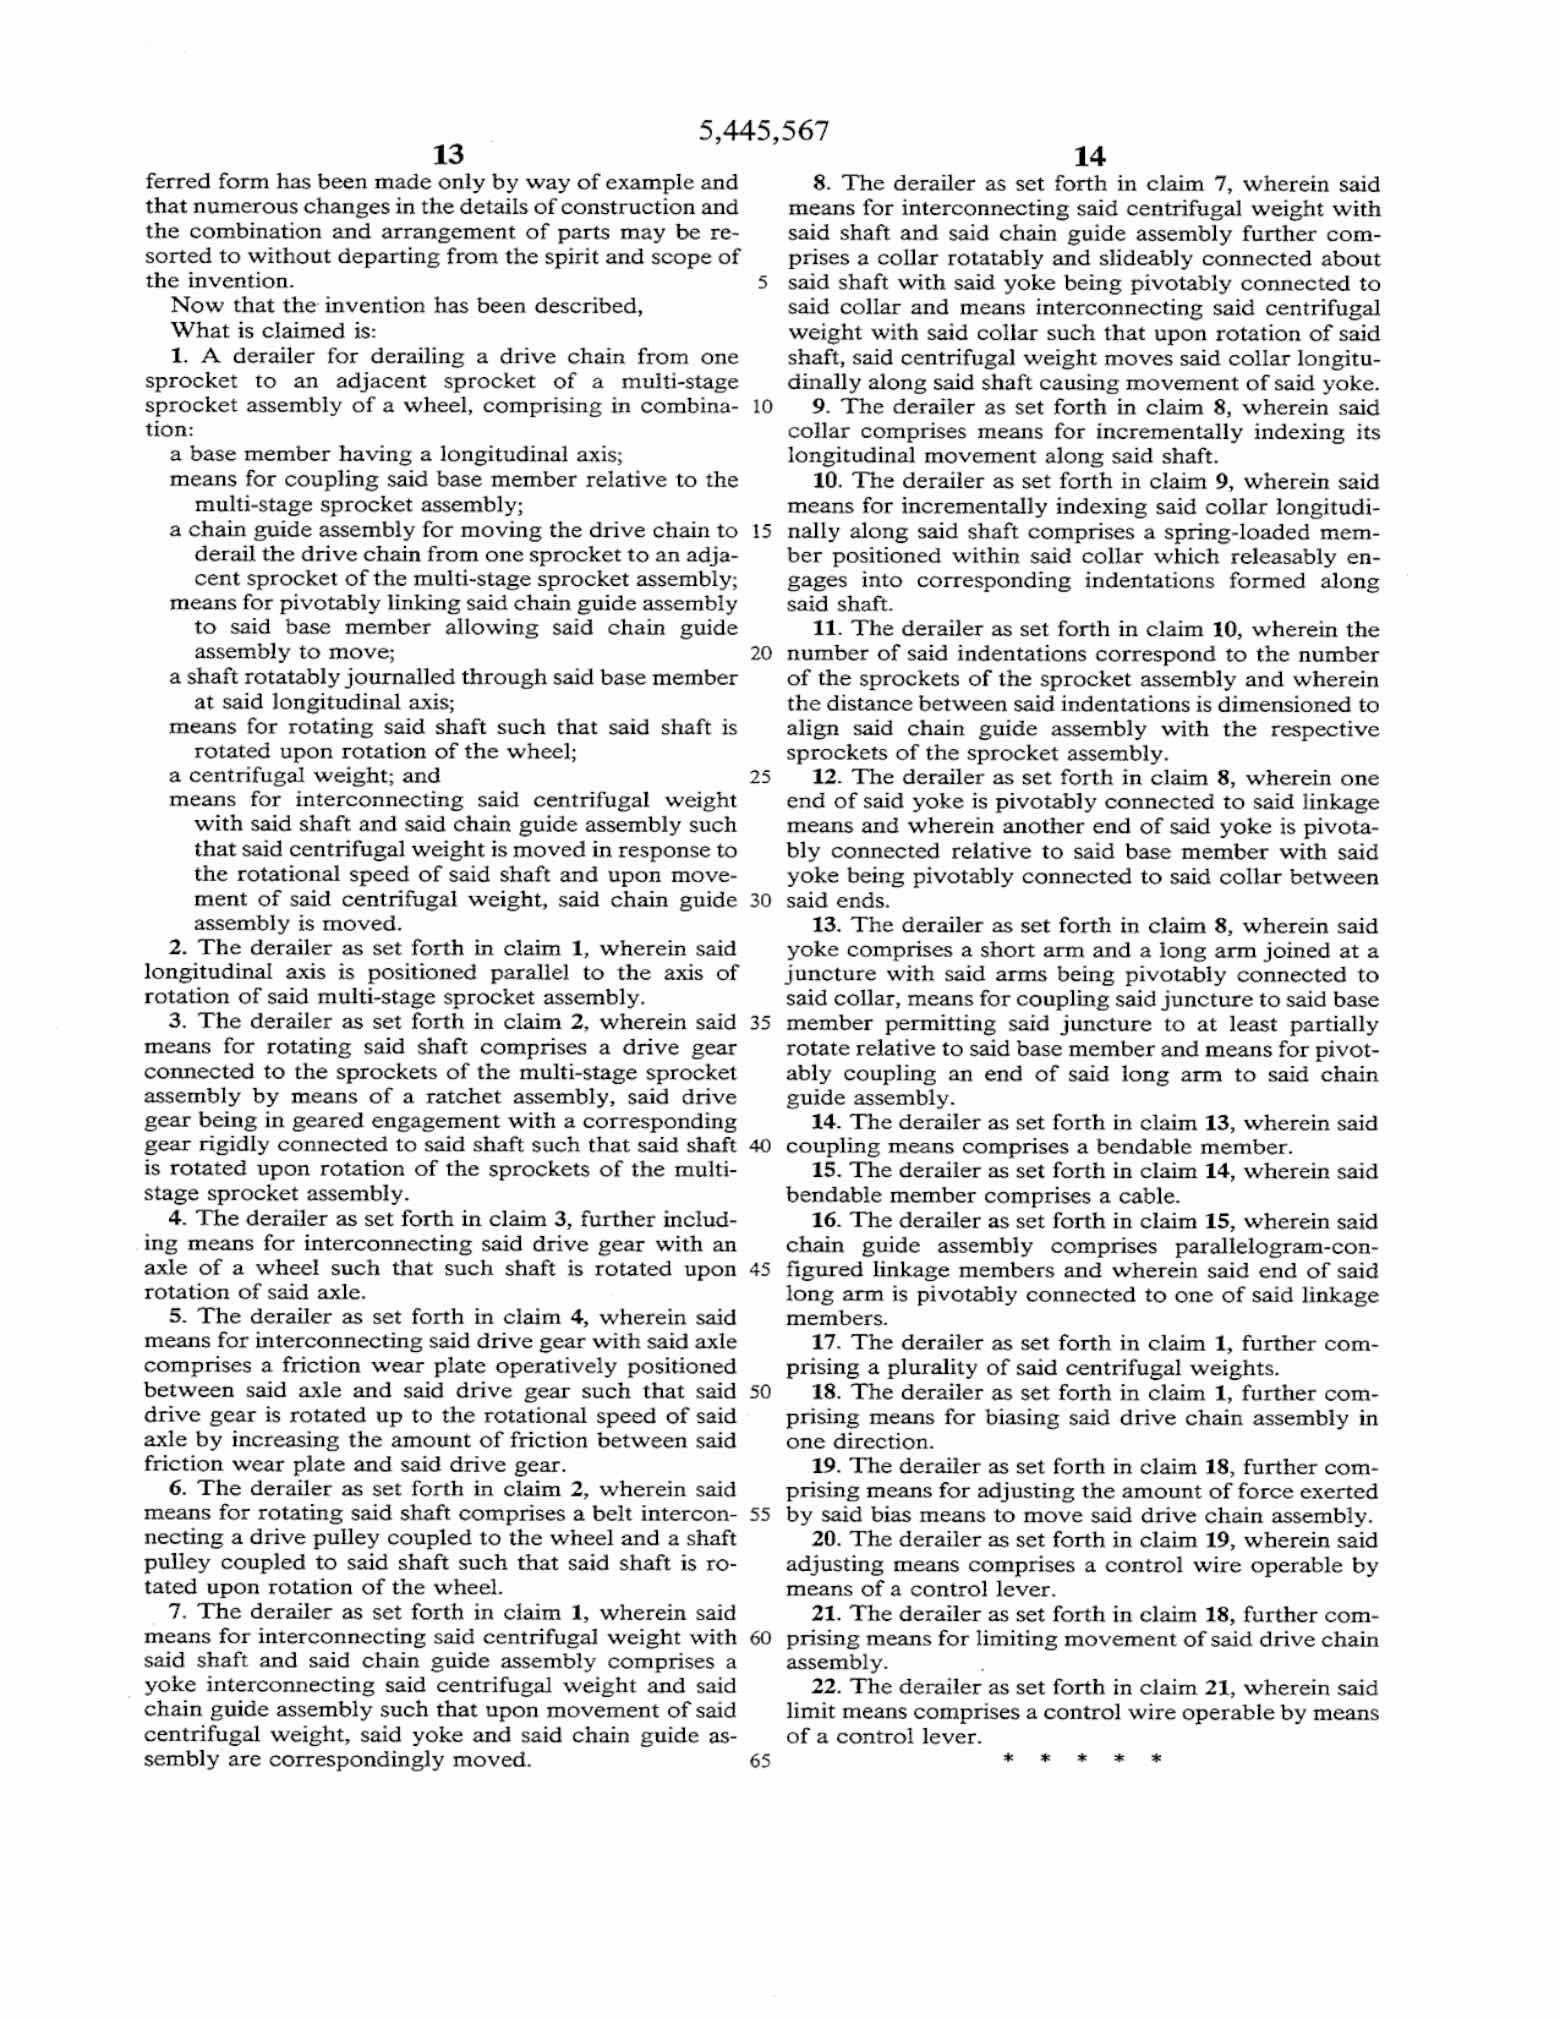 US Patent 5,445,567 - AutoBike SmartShift scan 8 main image